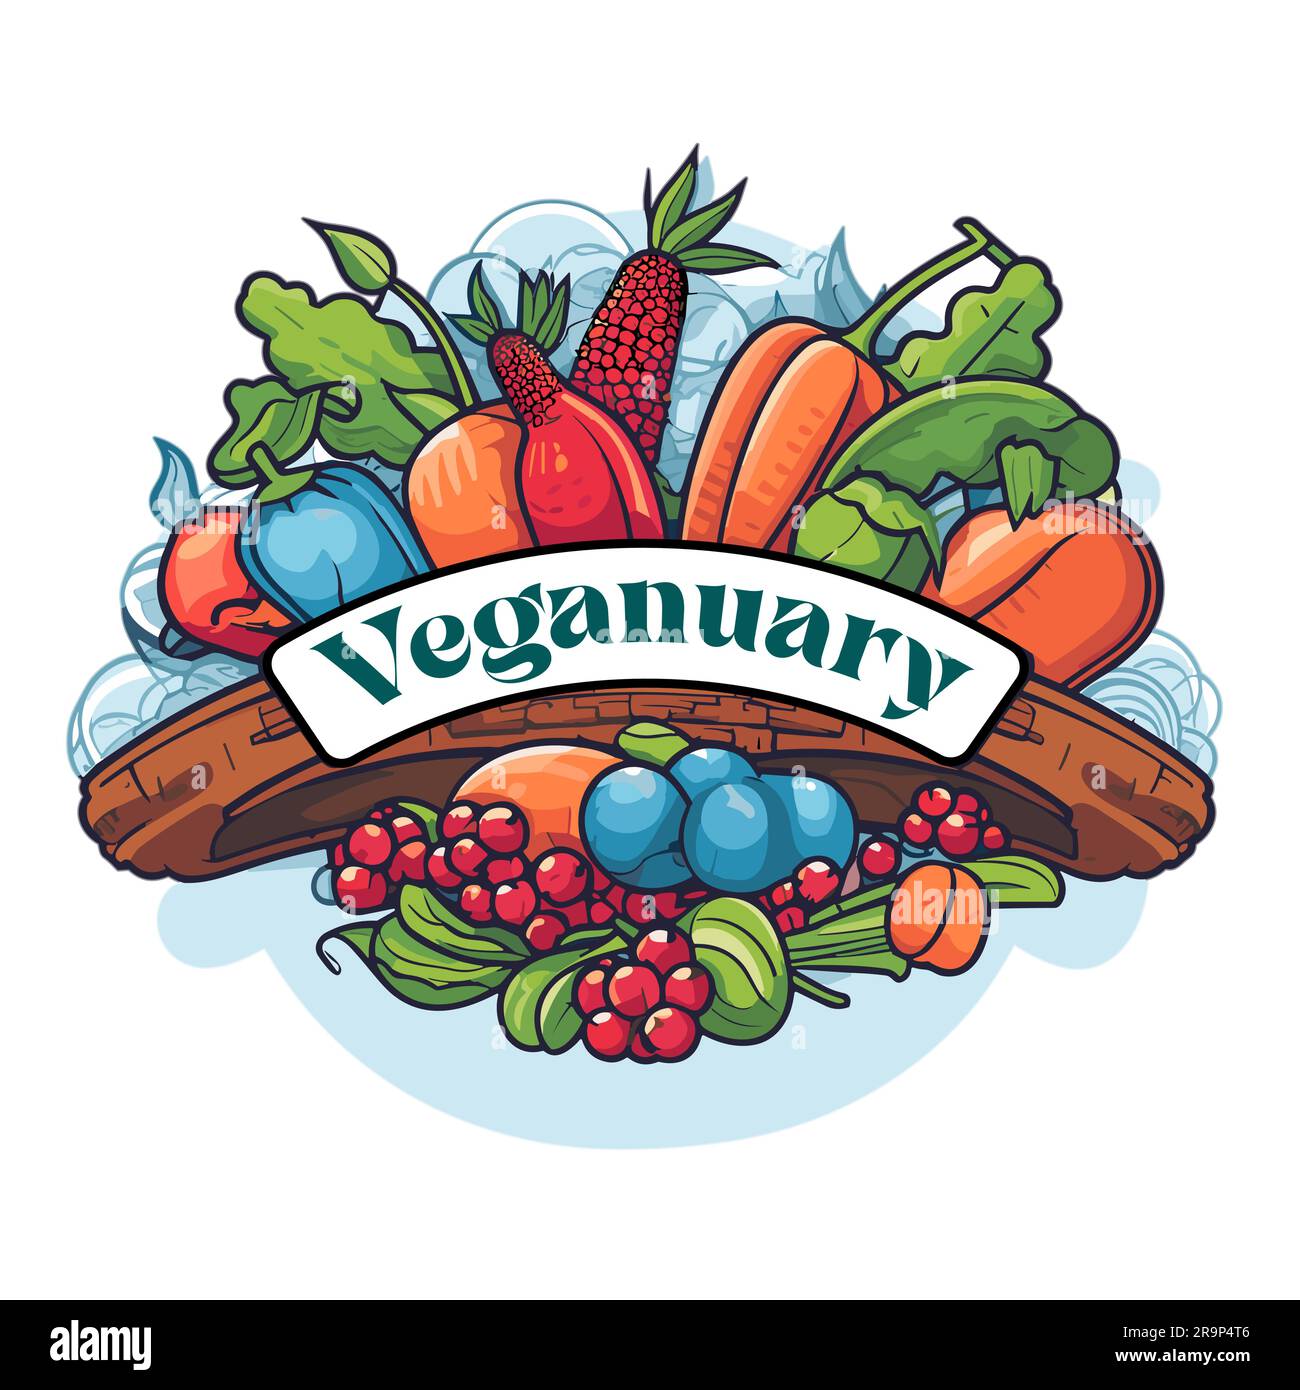 Veganuary Vector Illustration Stock Vector